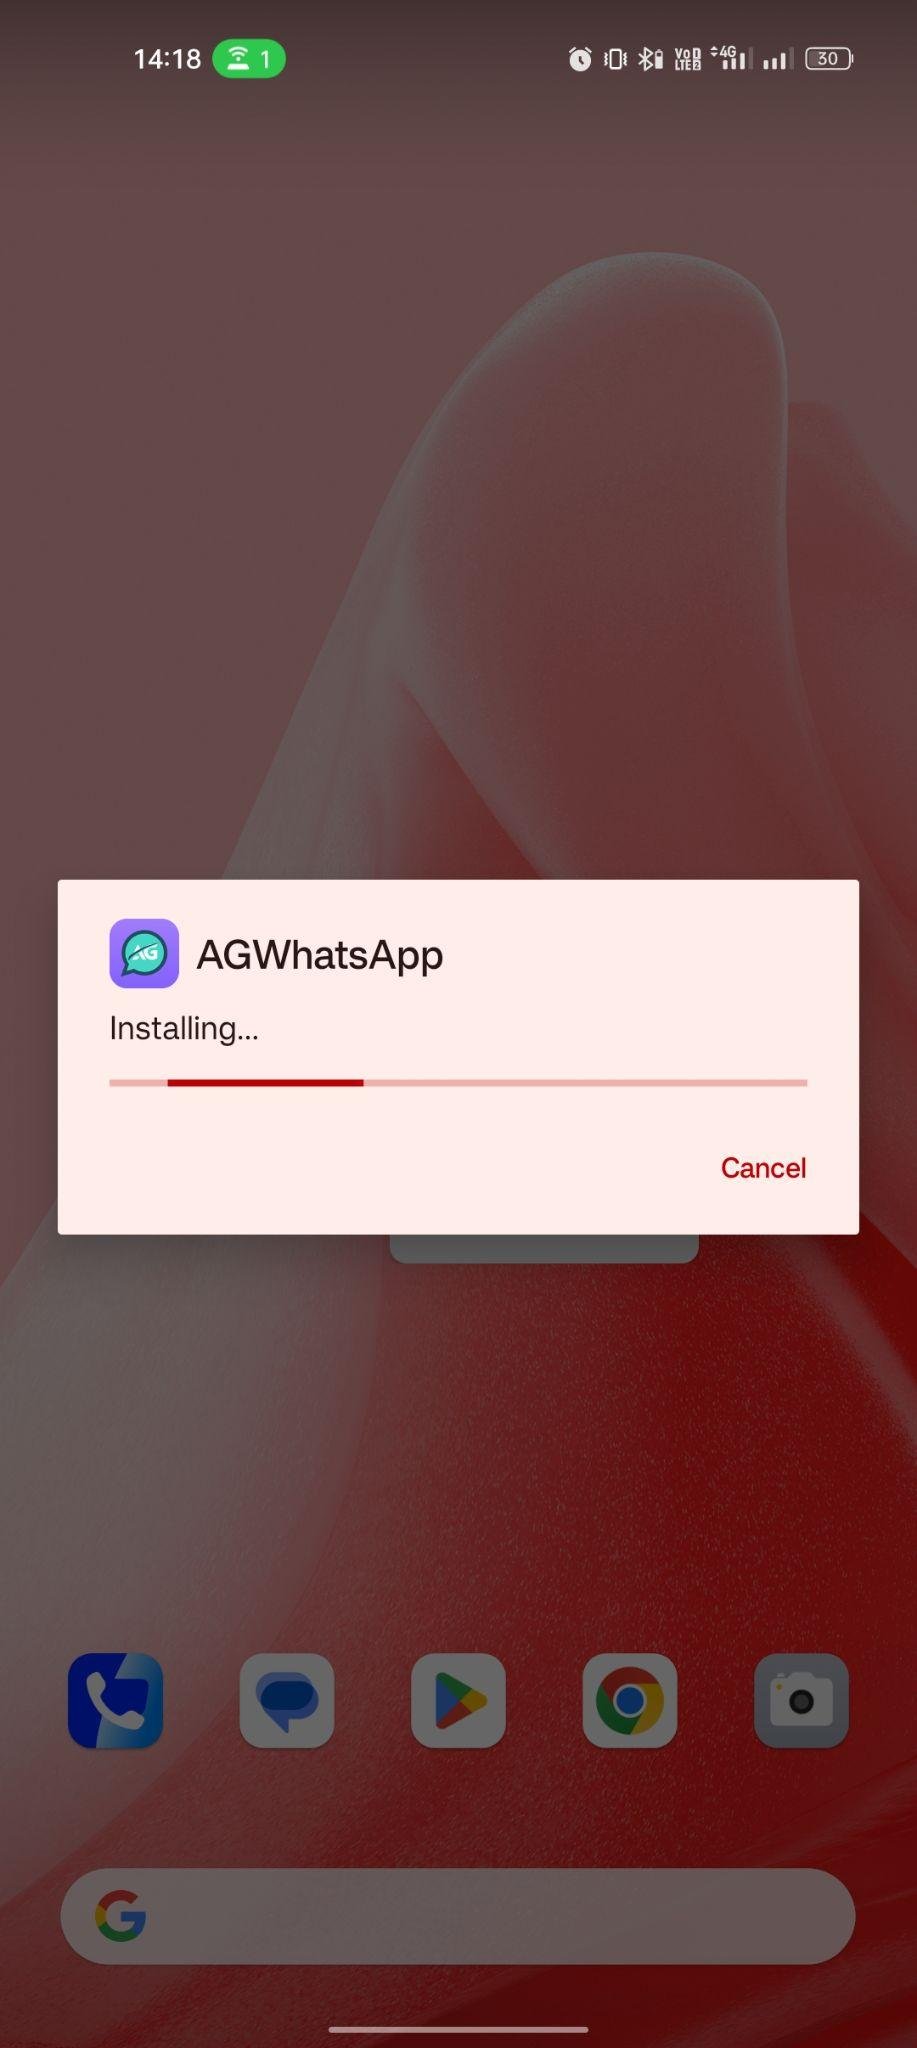 AGWhatsApp apk installing